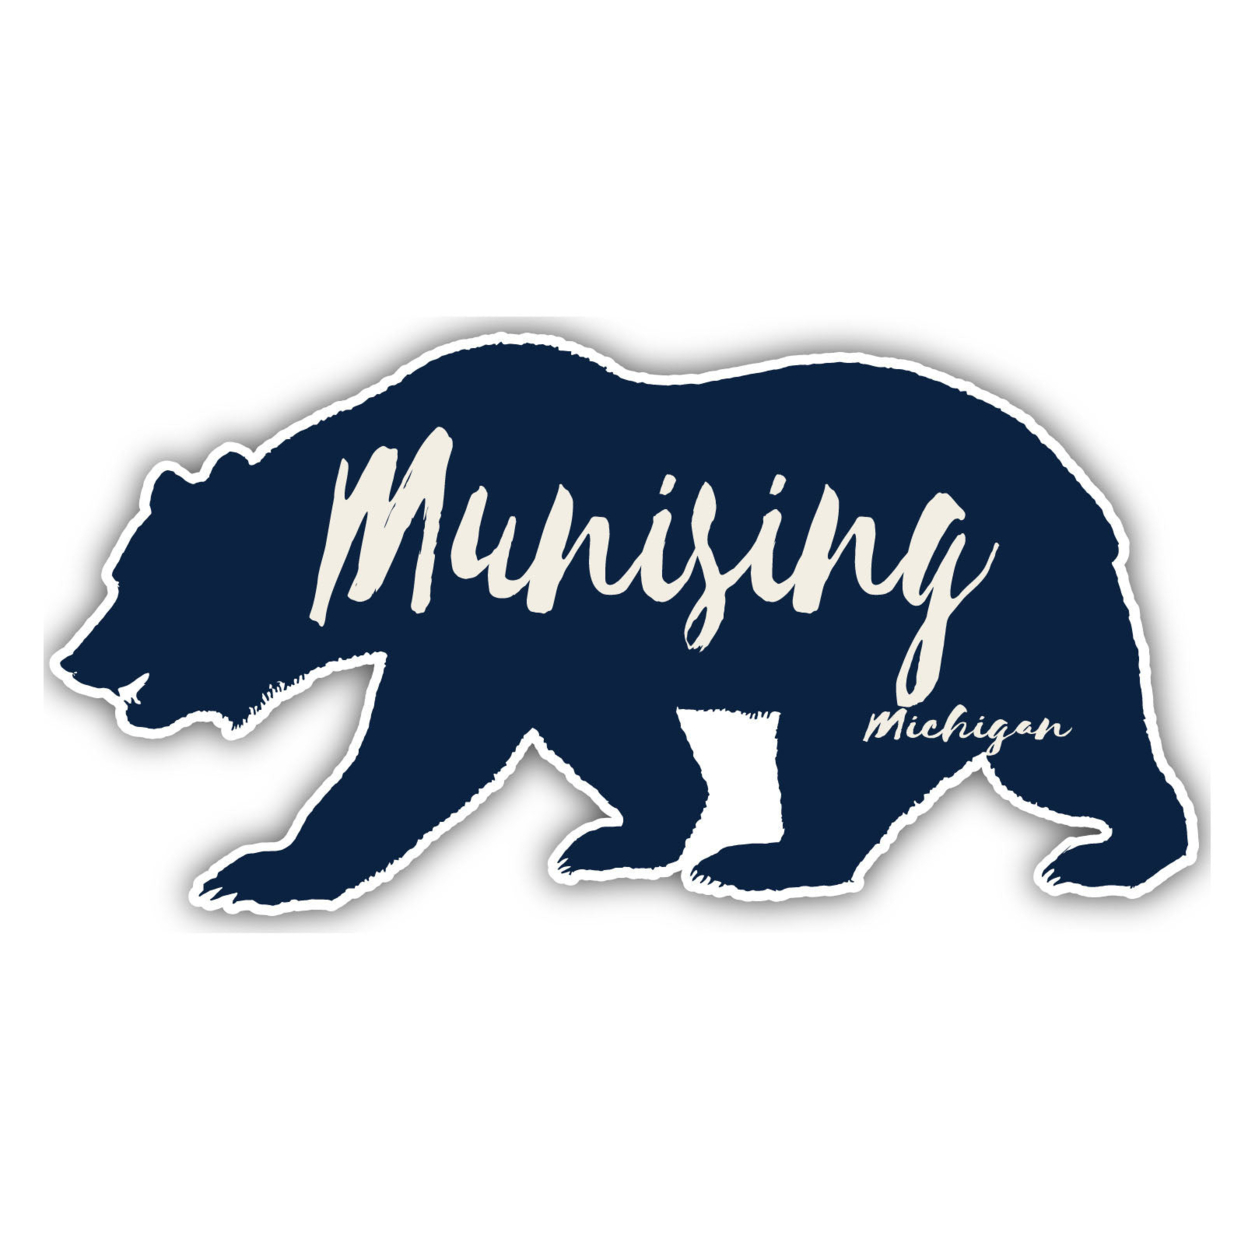 Munising Michigan Souvenir Decorative Stickers (Choose Theme And Size) - Single Unit, 4-Inch, Bear